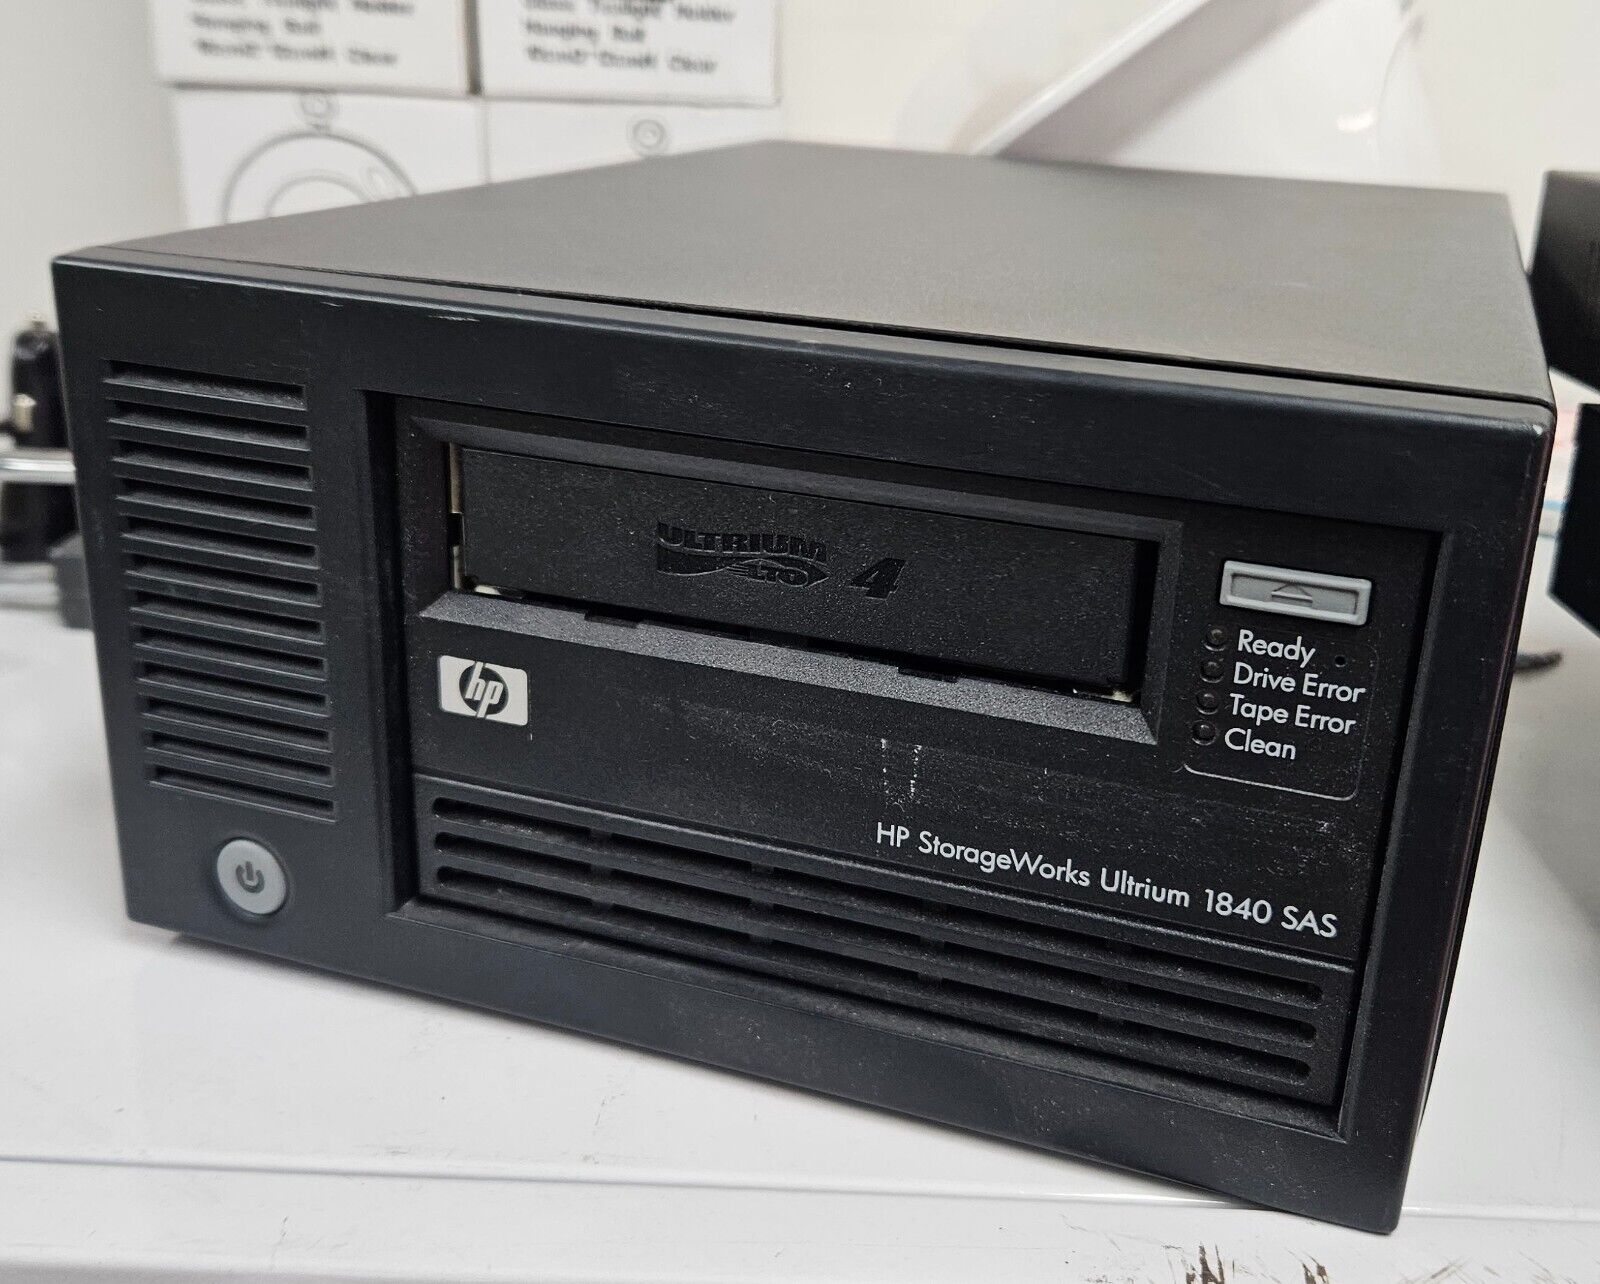 HP STORAGEWORKS ULTRIUM 1840 SAS EH861A EXTERNAL TAPE BACKUP